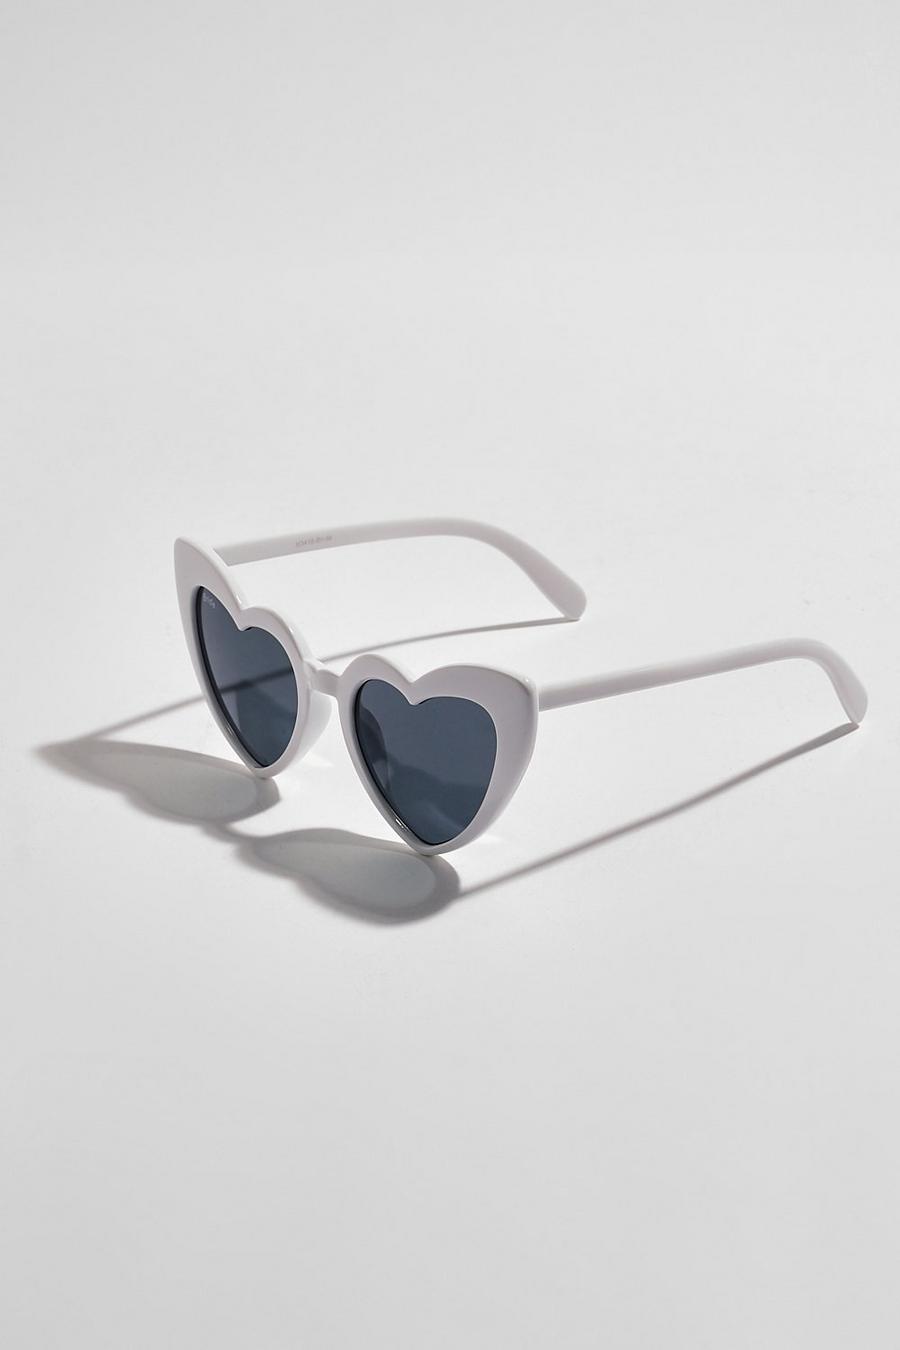 White Kuboraum Maske Y3 sunglasses